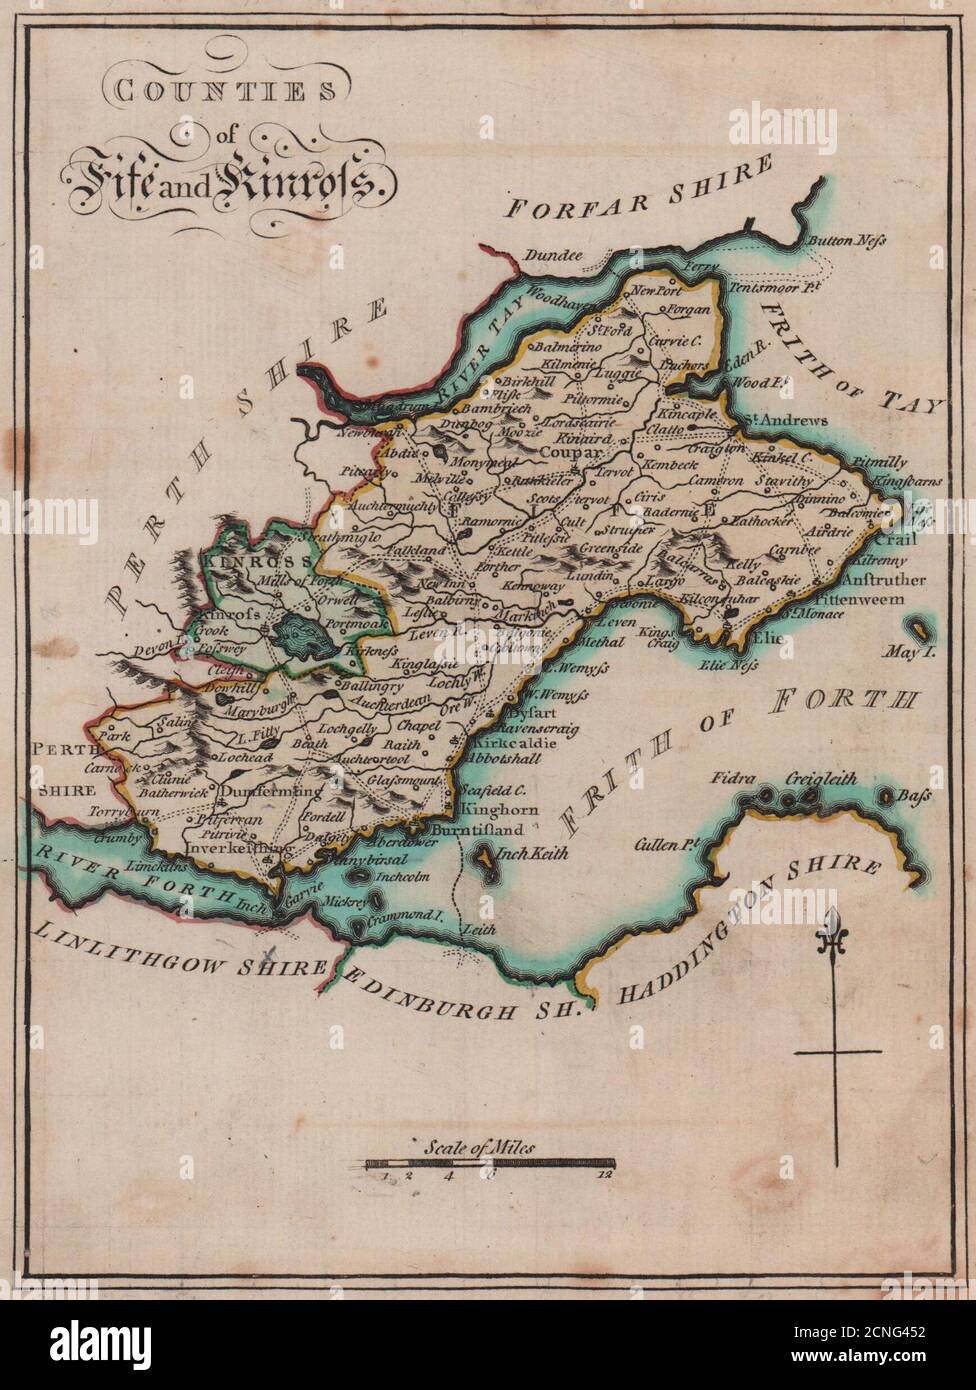 Counties of Fife and Kinross. Fife and Kinross-shire. SAYER / ARMSTRONG 1787 map Stock Photo